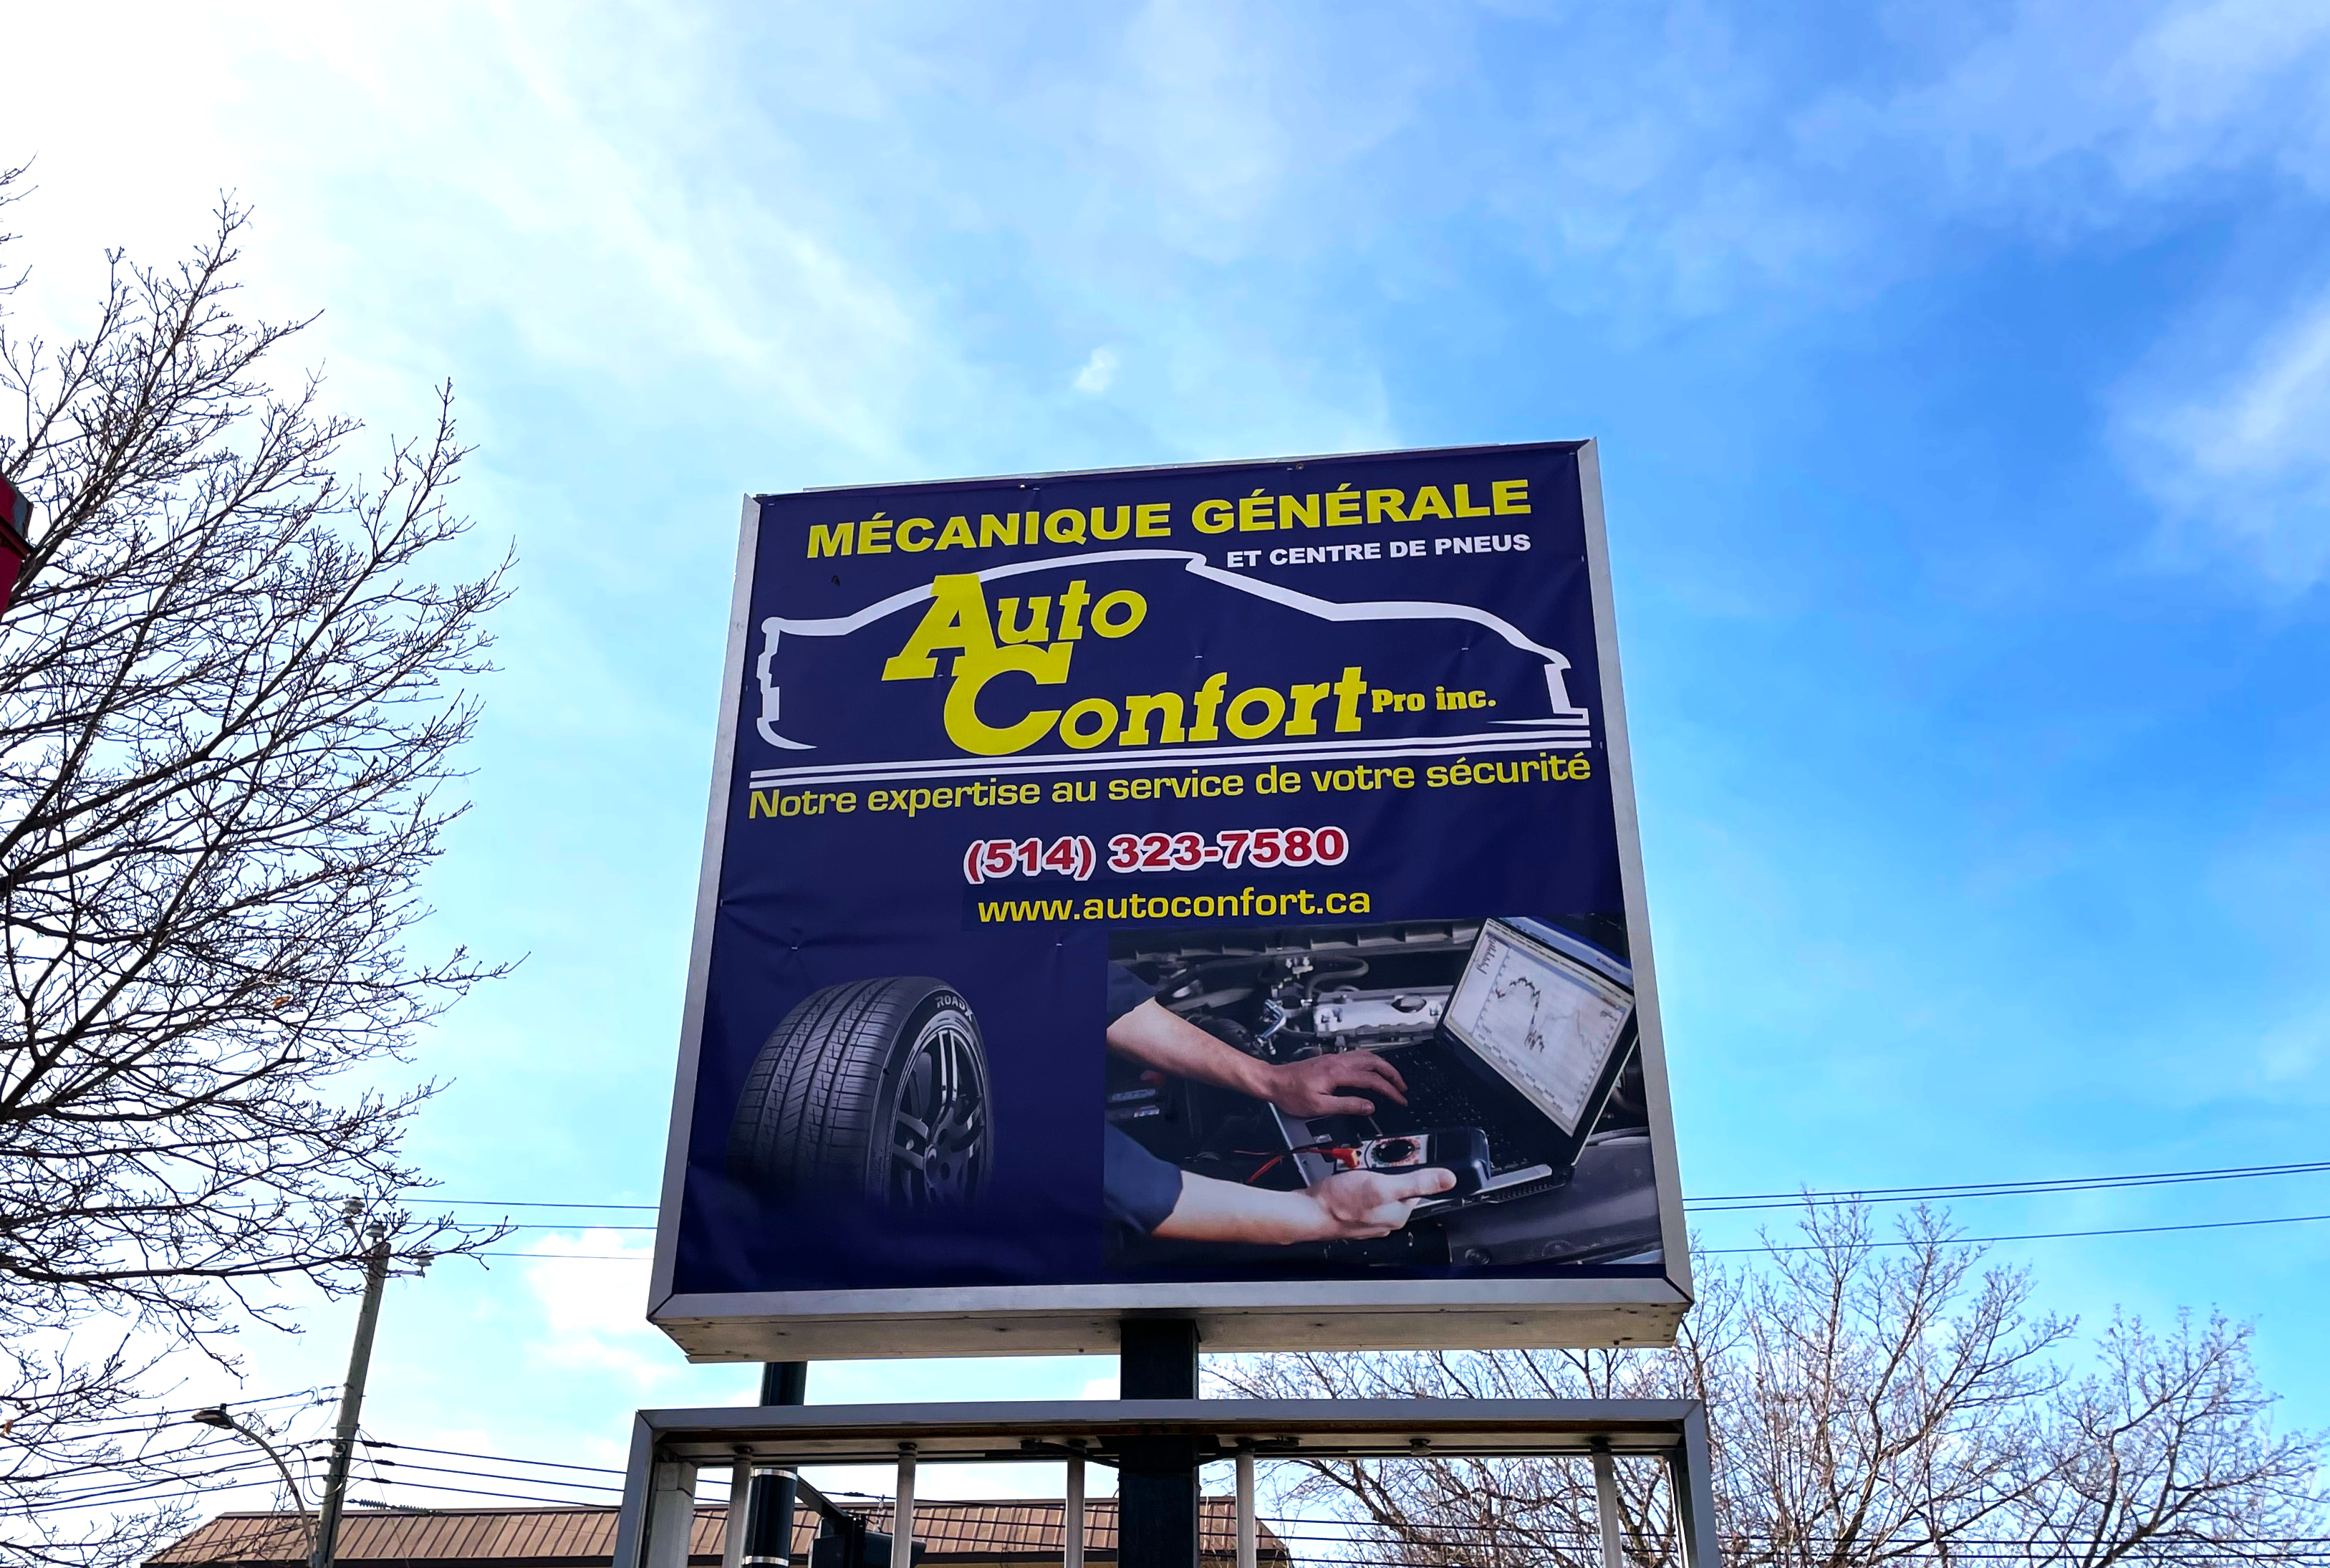 Auto confort - Image 1